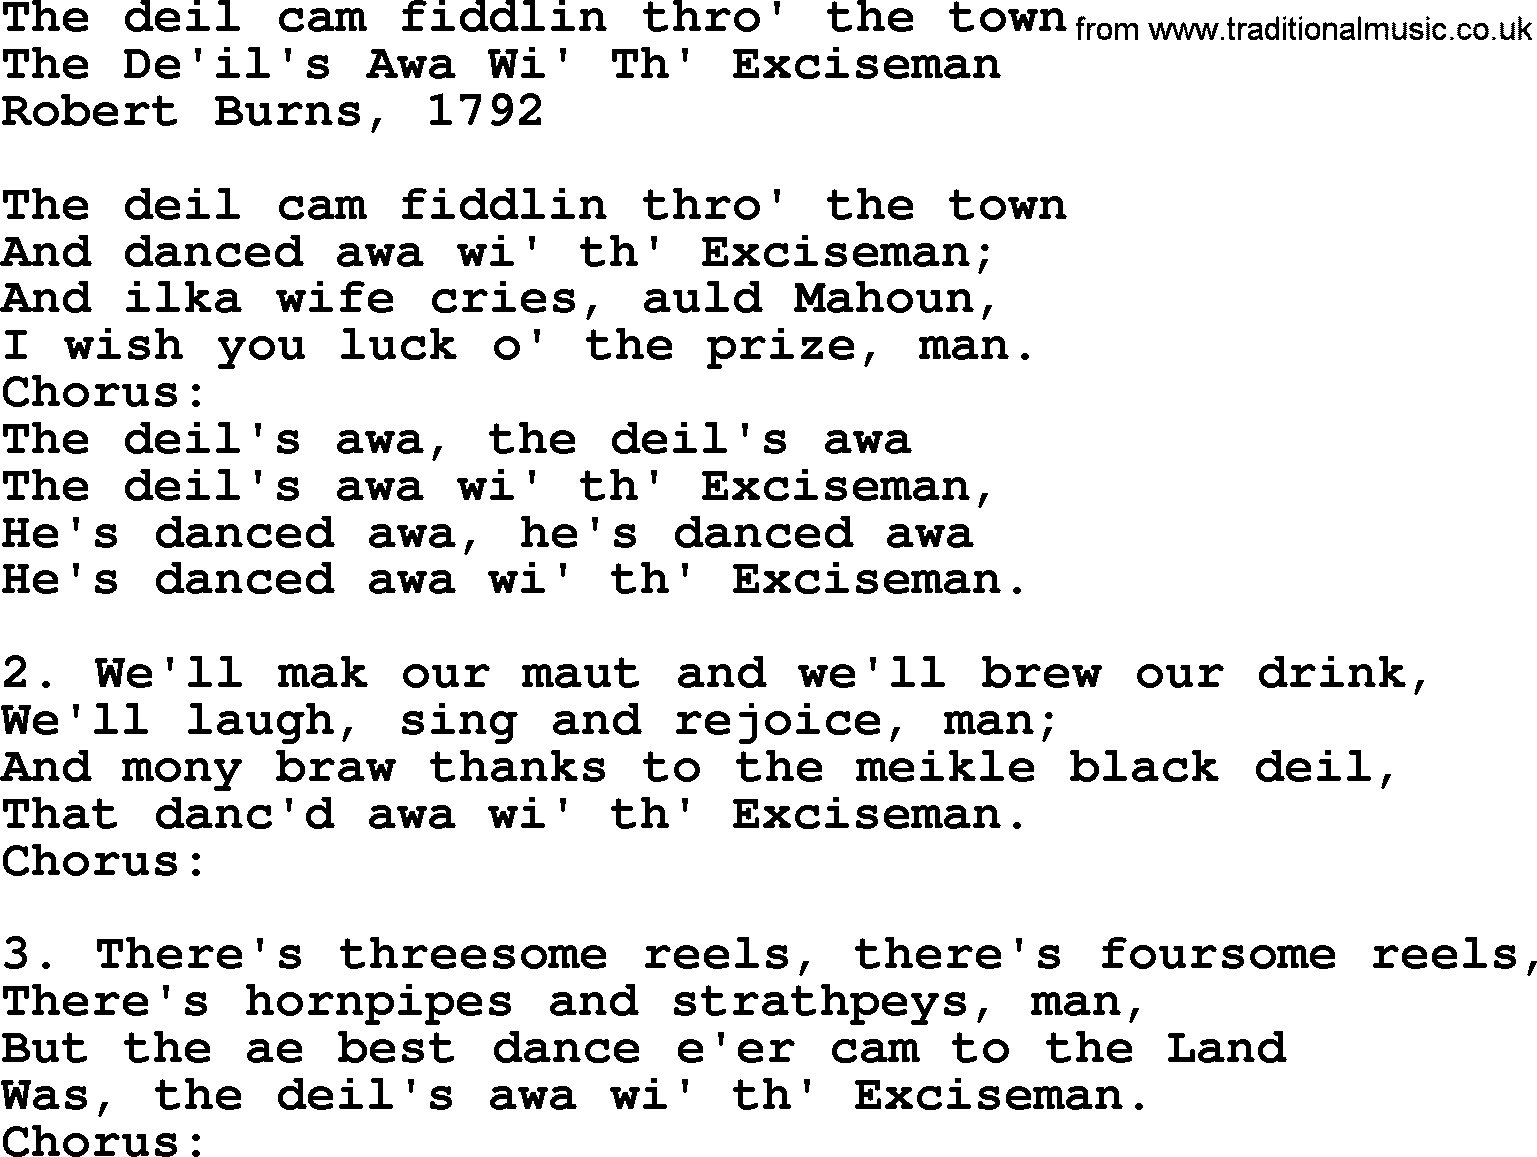 Robert Burns Songs & Lyrics: The Deil Cam Fiddlin Thro' The Town